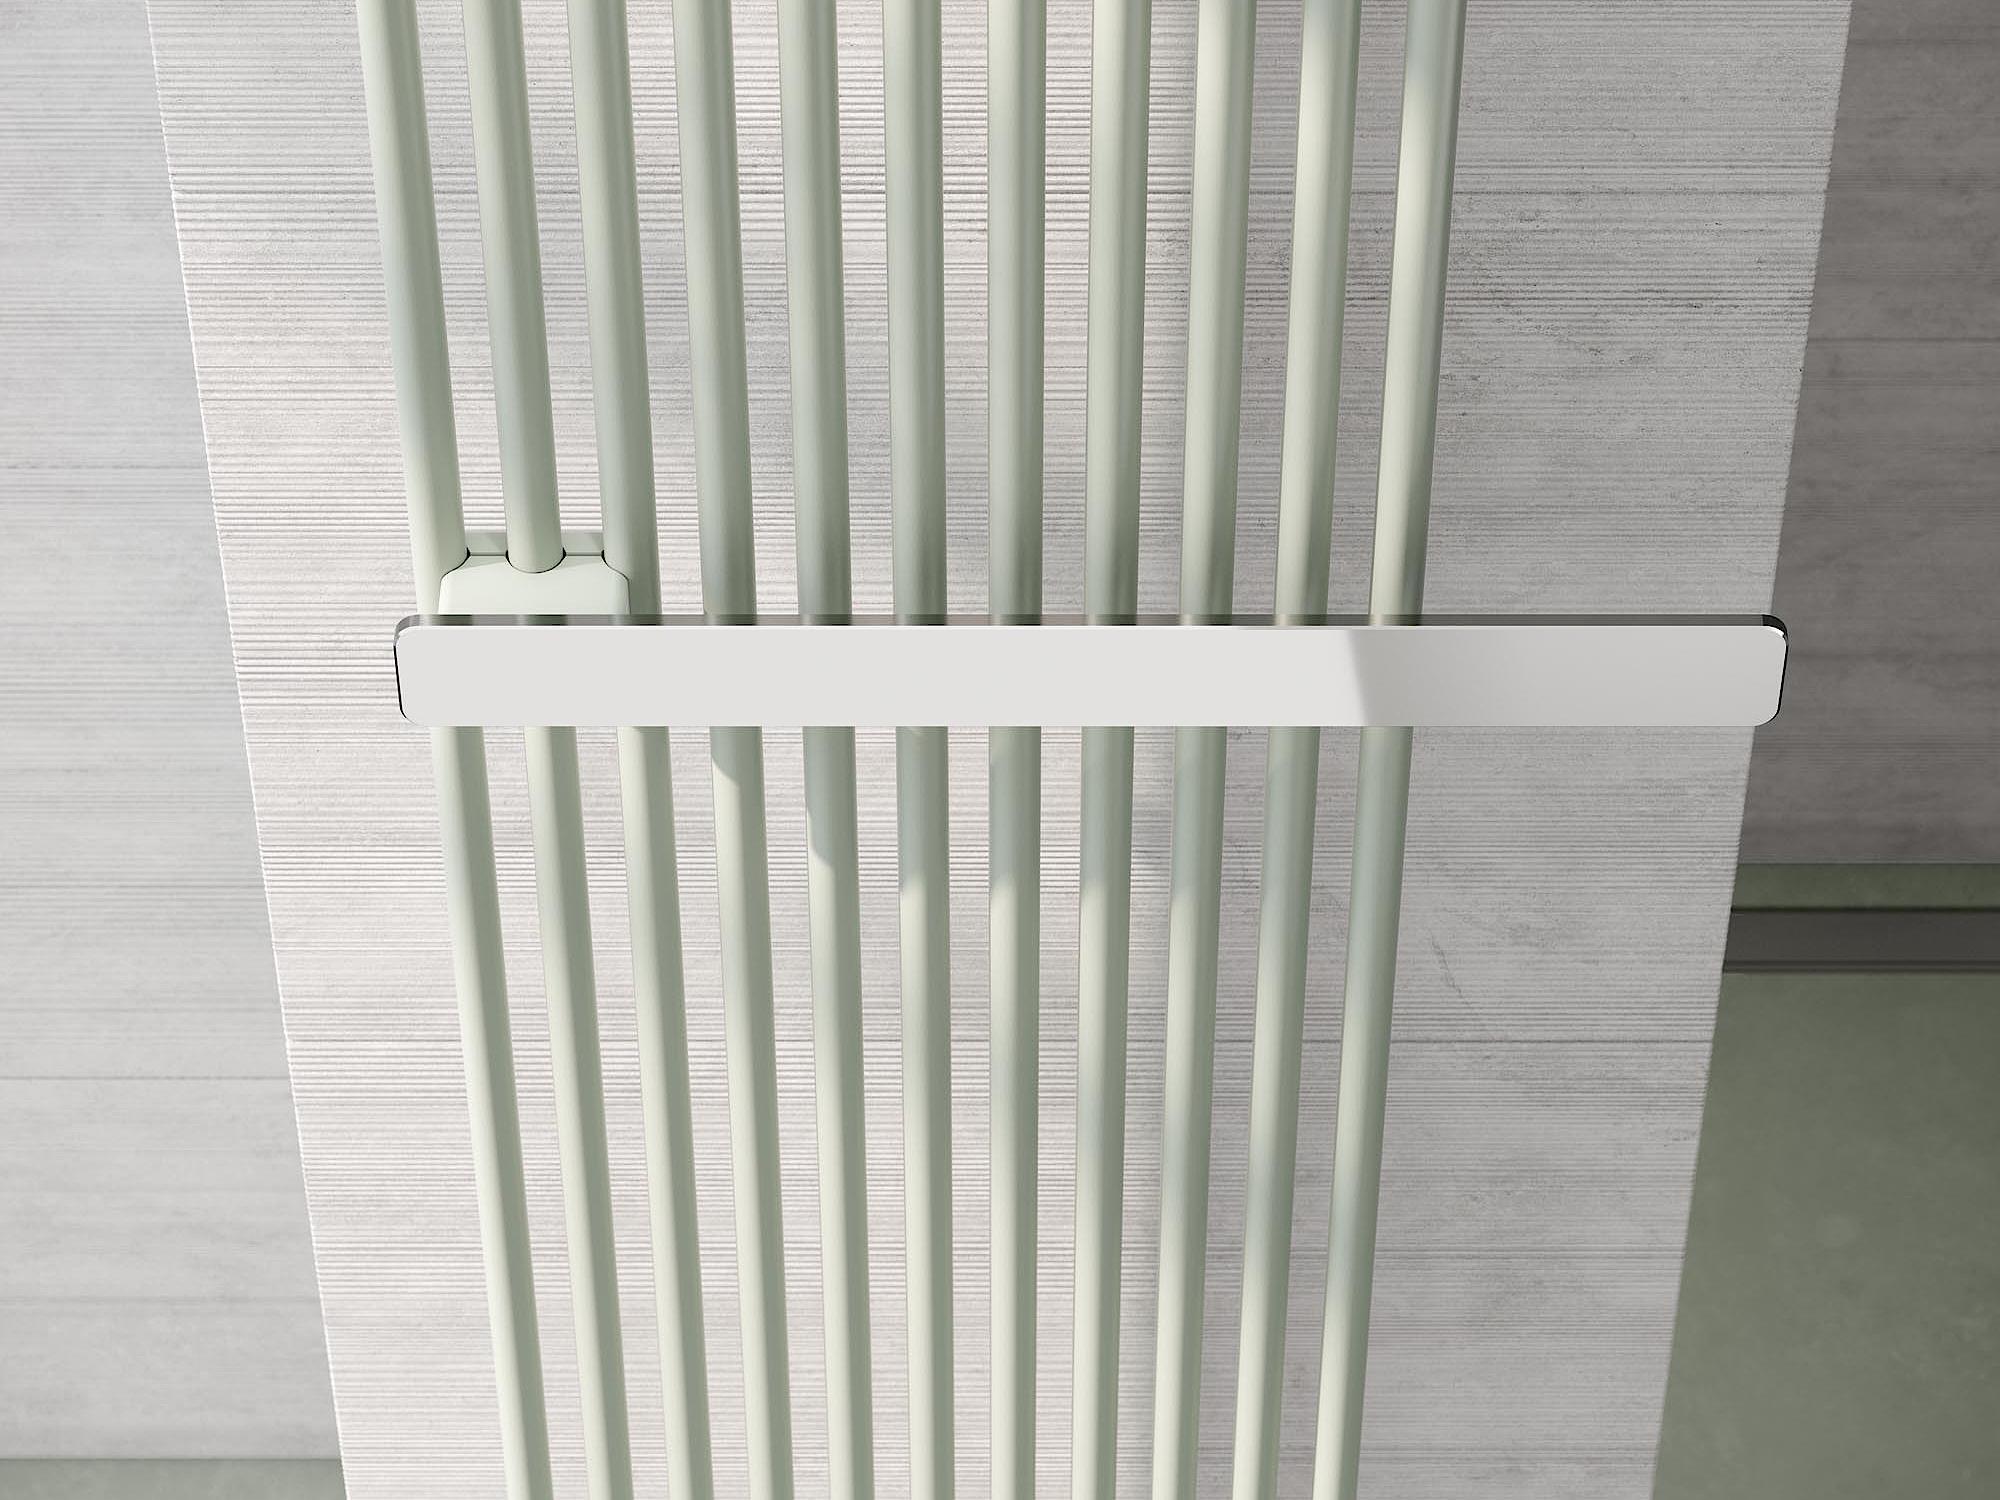 Polished stainless steel towel rail for Kermi Pio plus design and bathroom radiators.